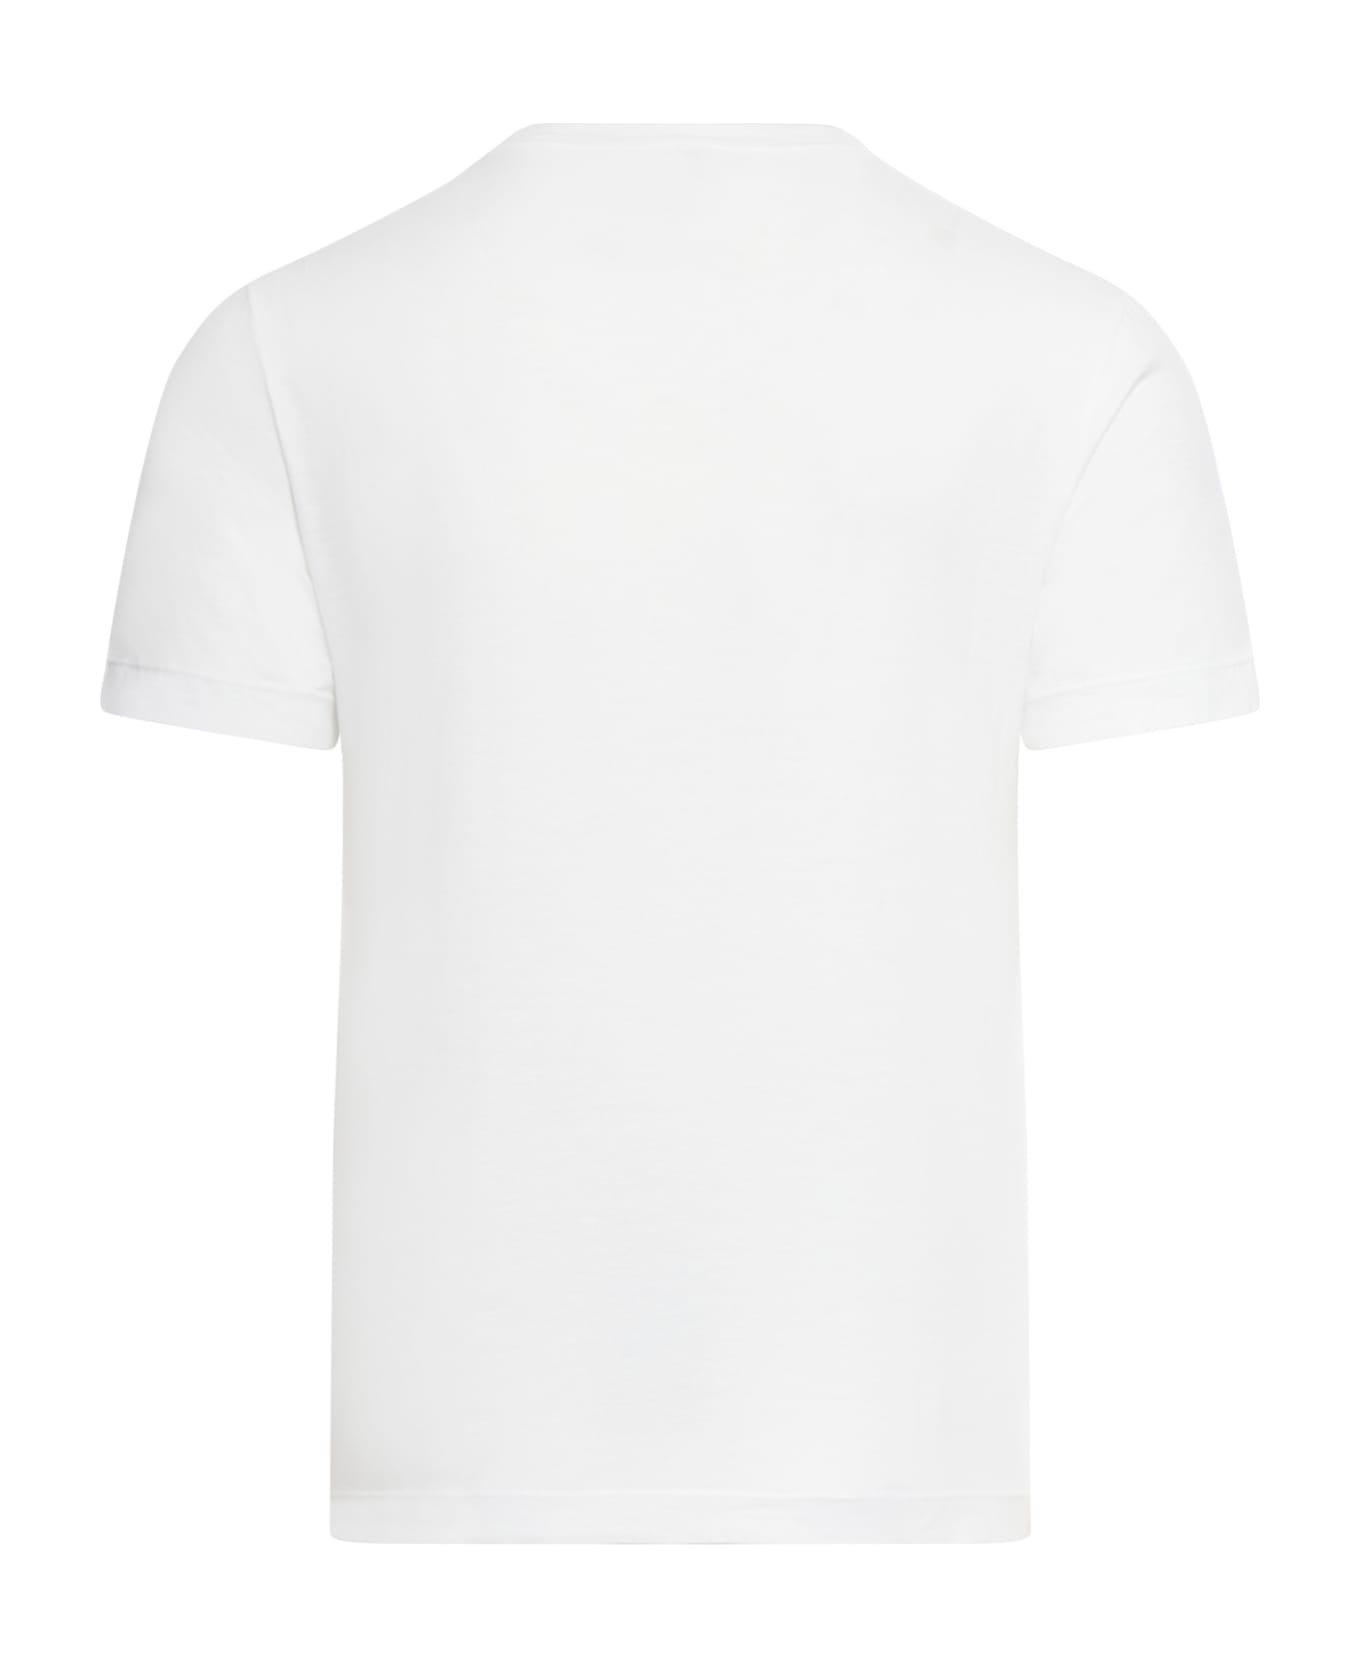 Transit Tshirt - Optical White シャツ